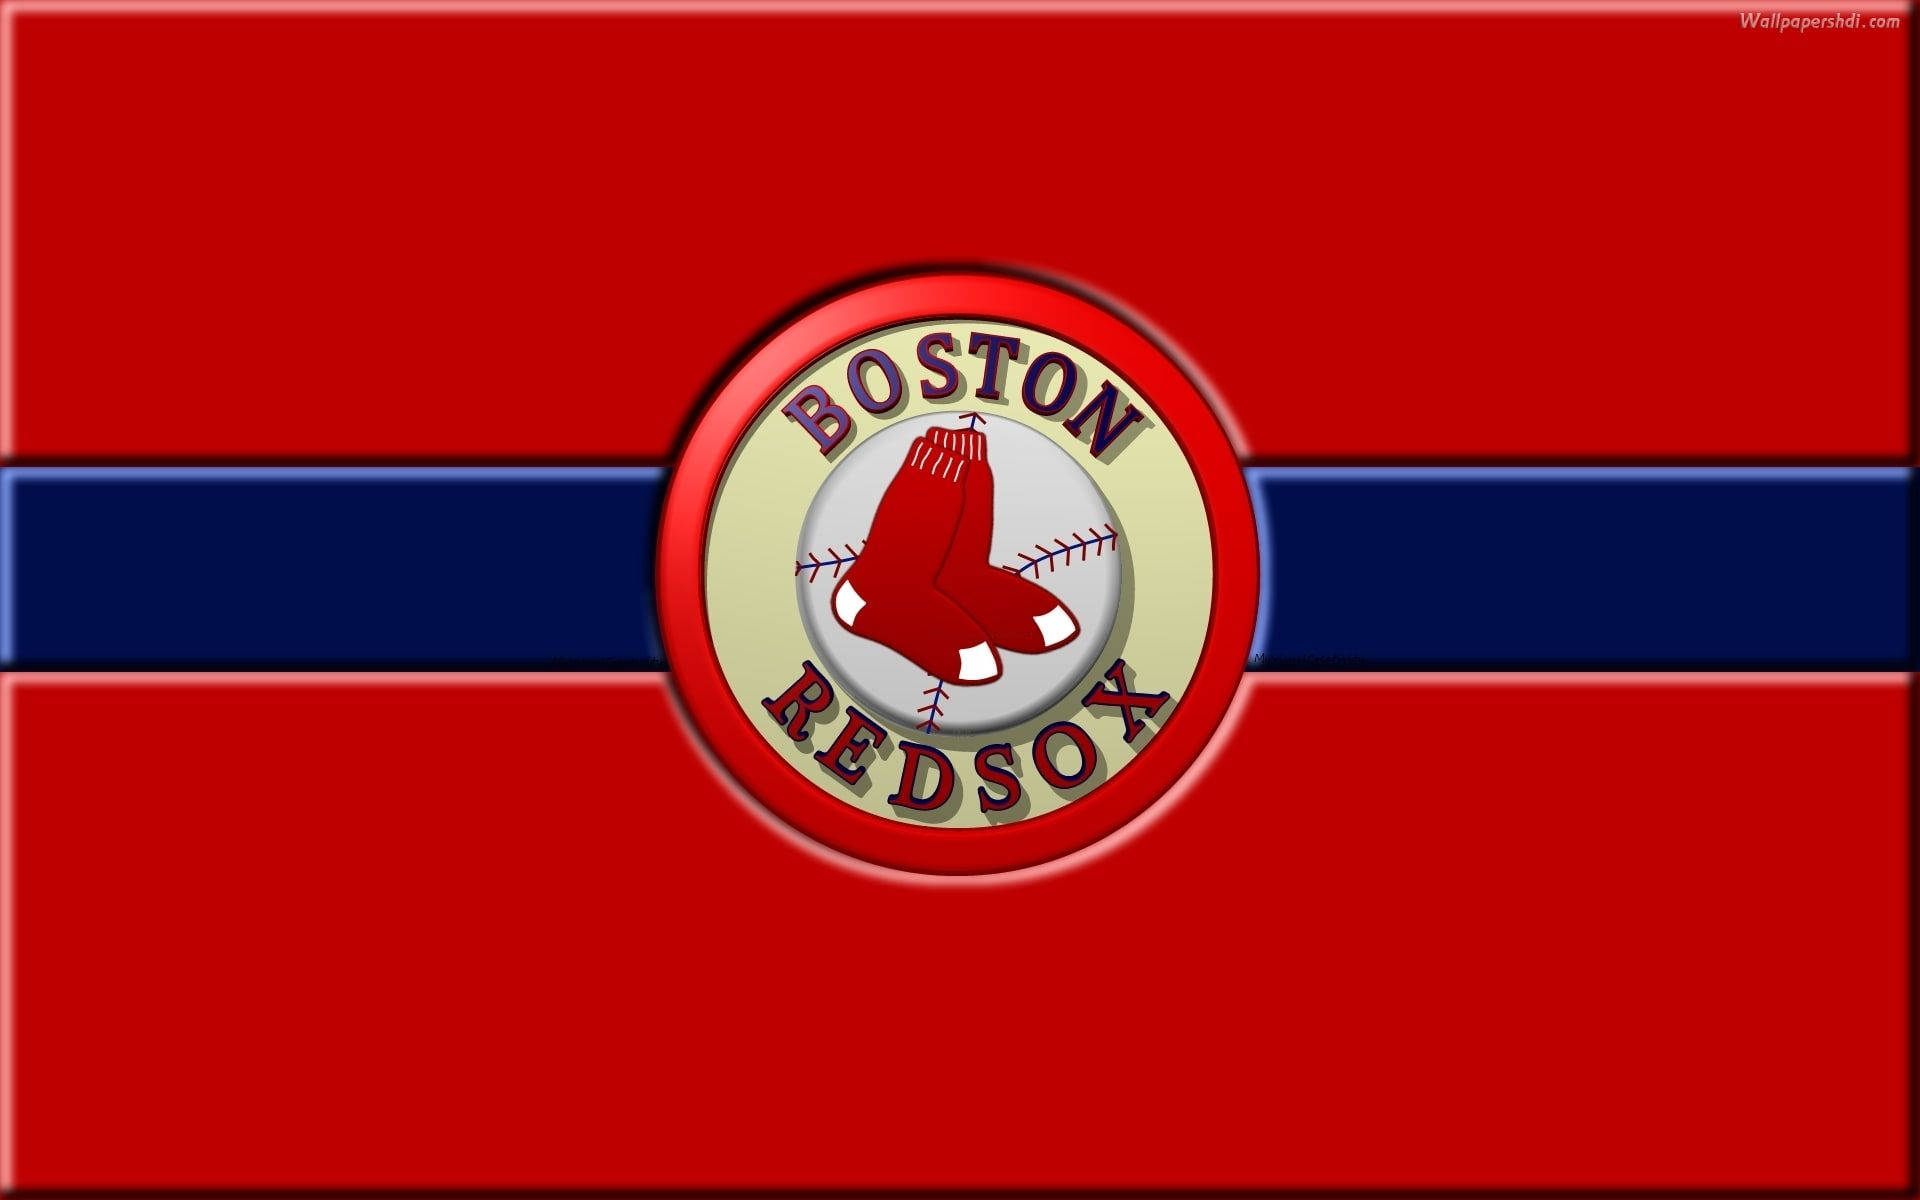 Boston Red Sox Baseball Team Wallpaper